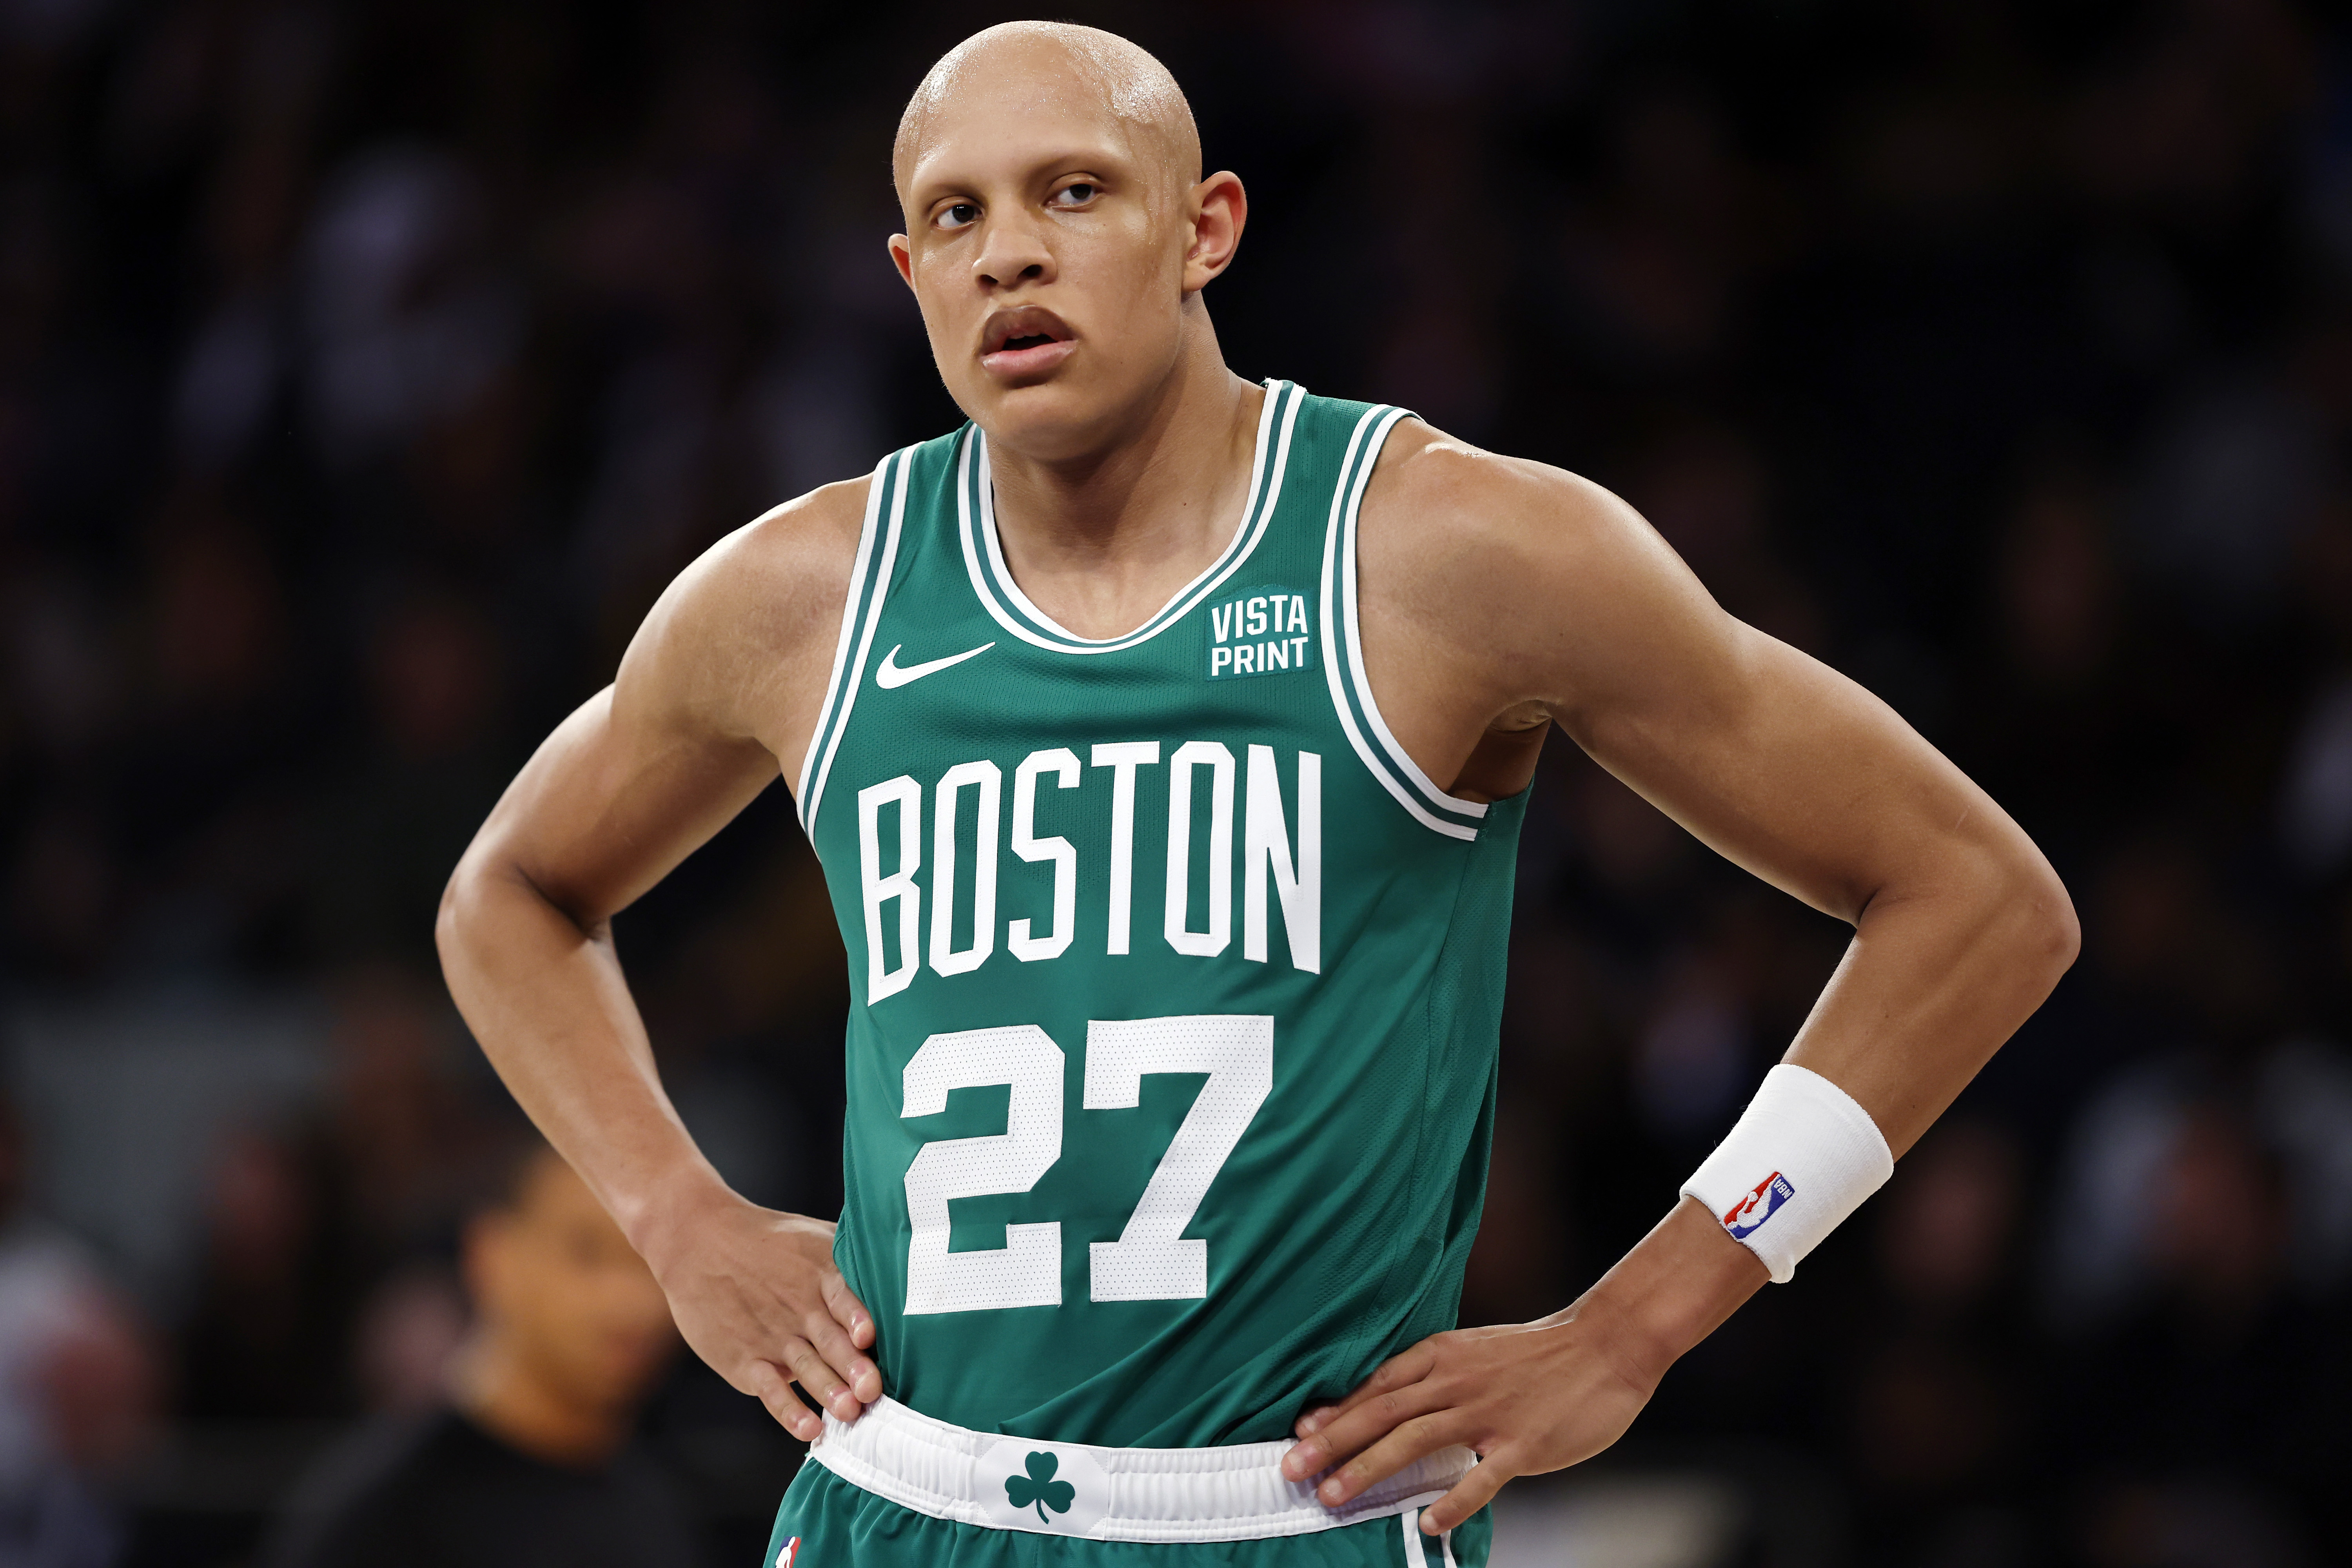 Jordan Walsh of the Boston Celtics looks on during a preseason game against the New York Knicks